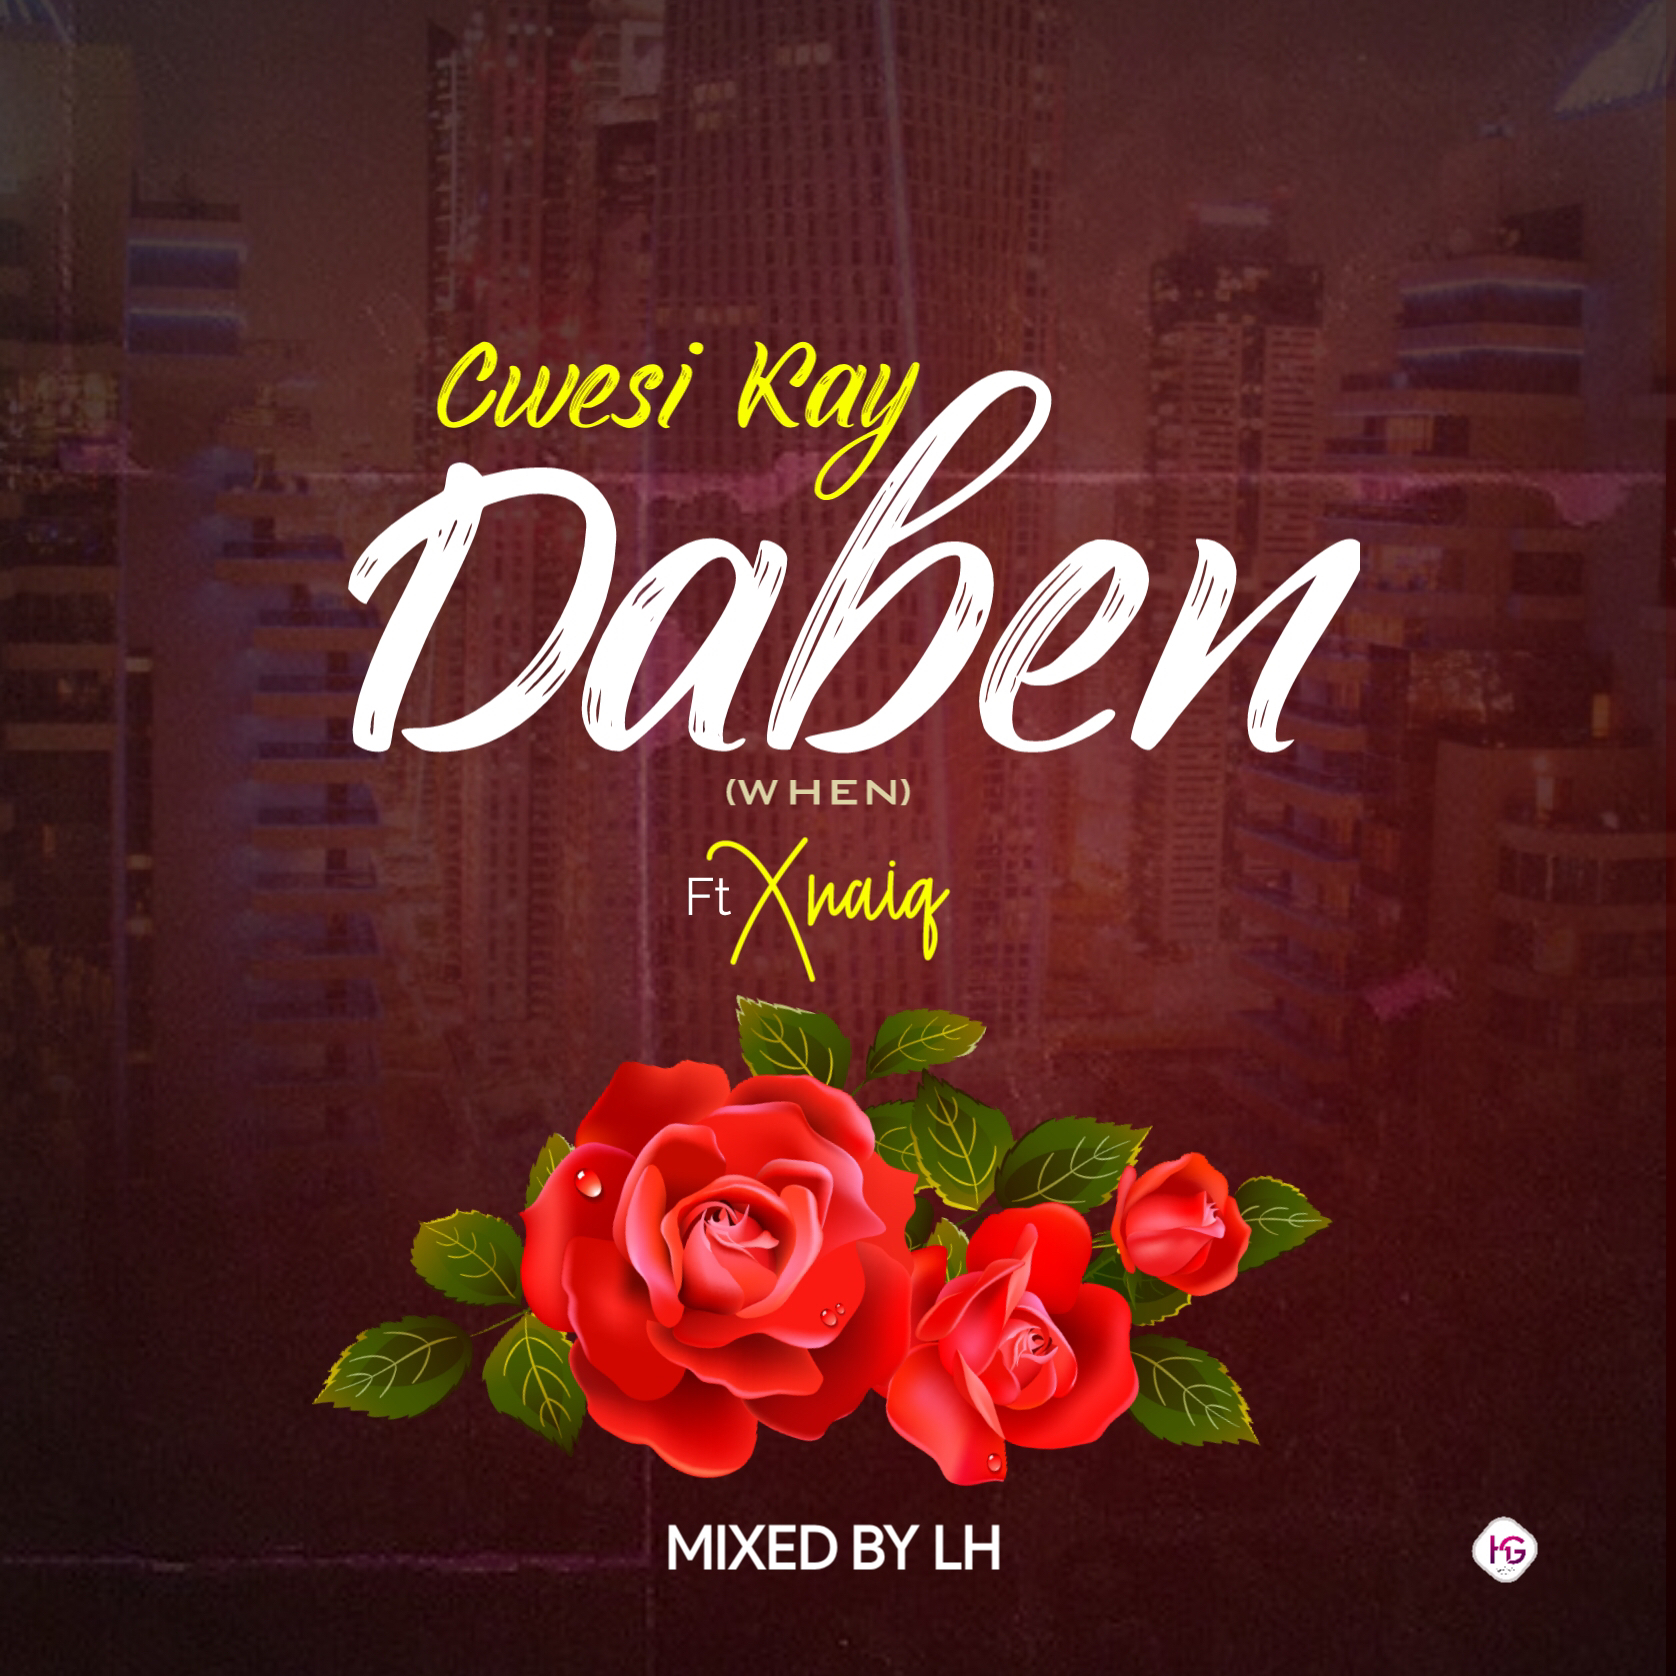 Cwesi Kay - Daben Ft. Xnaiq (Mixed By LH)